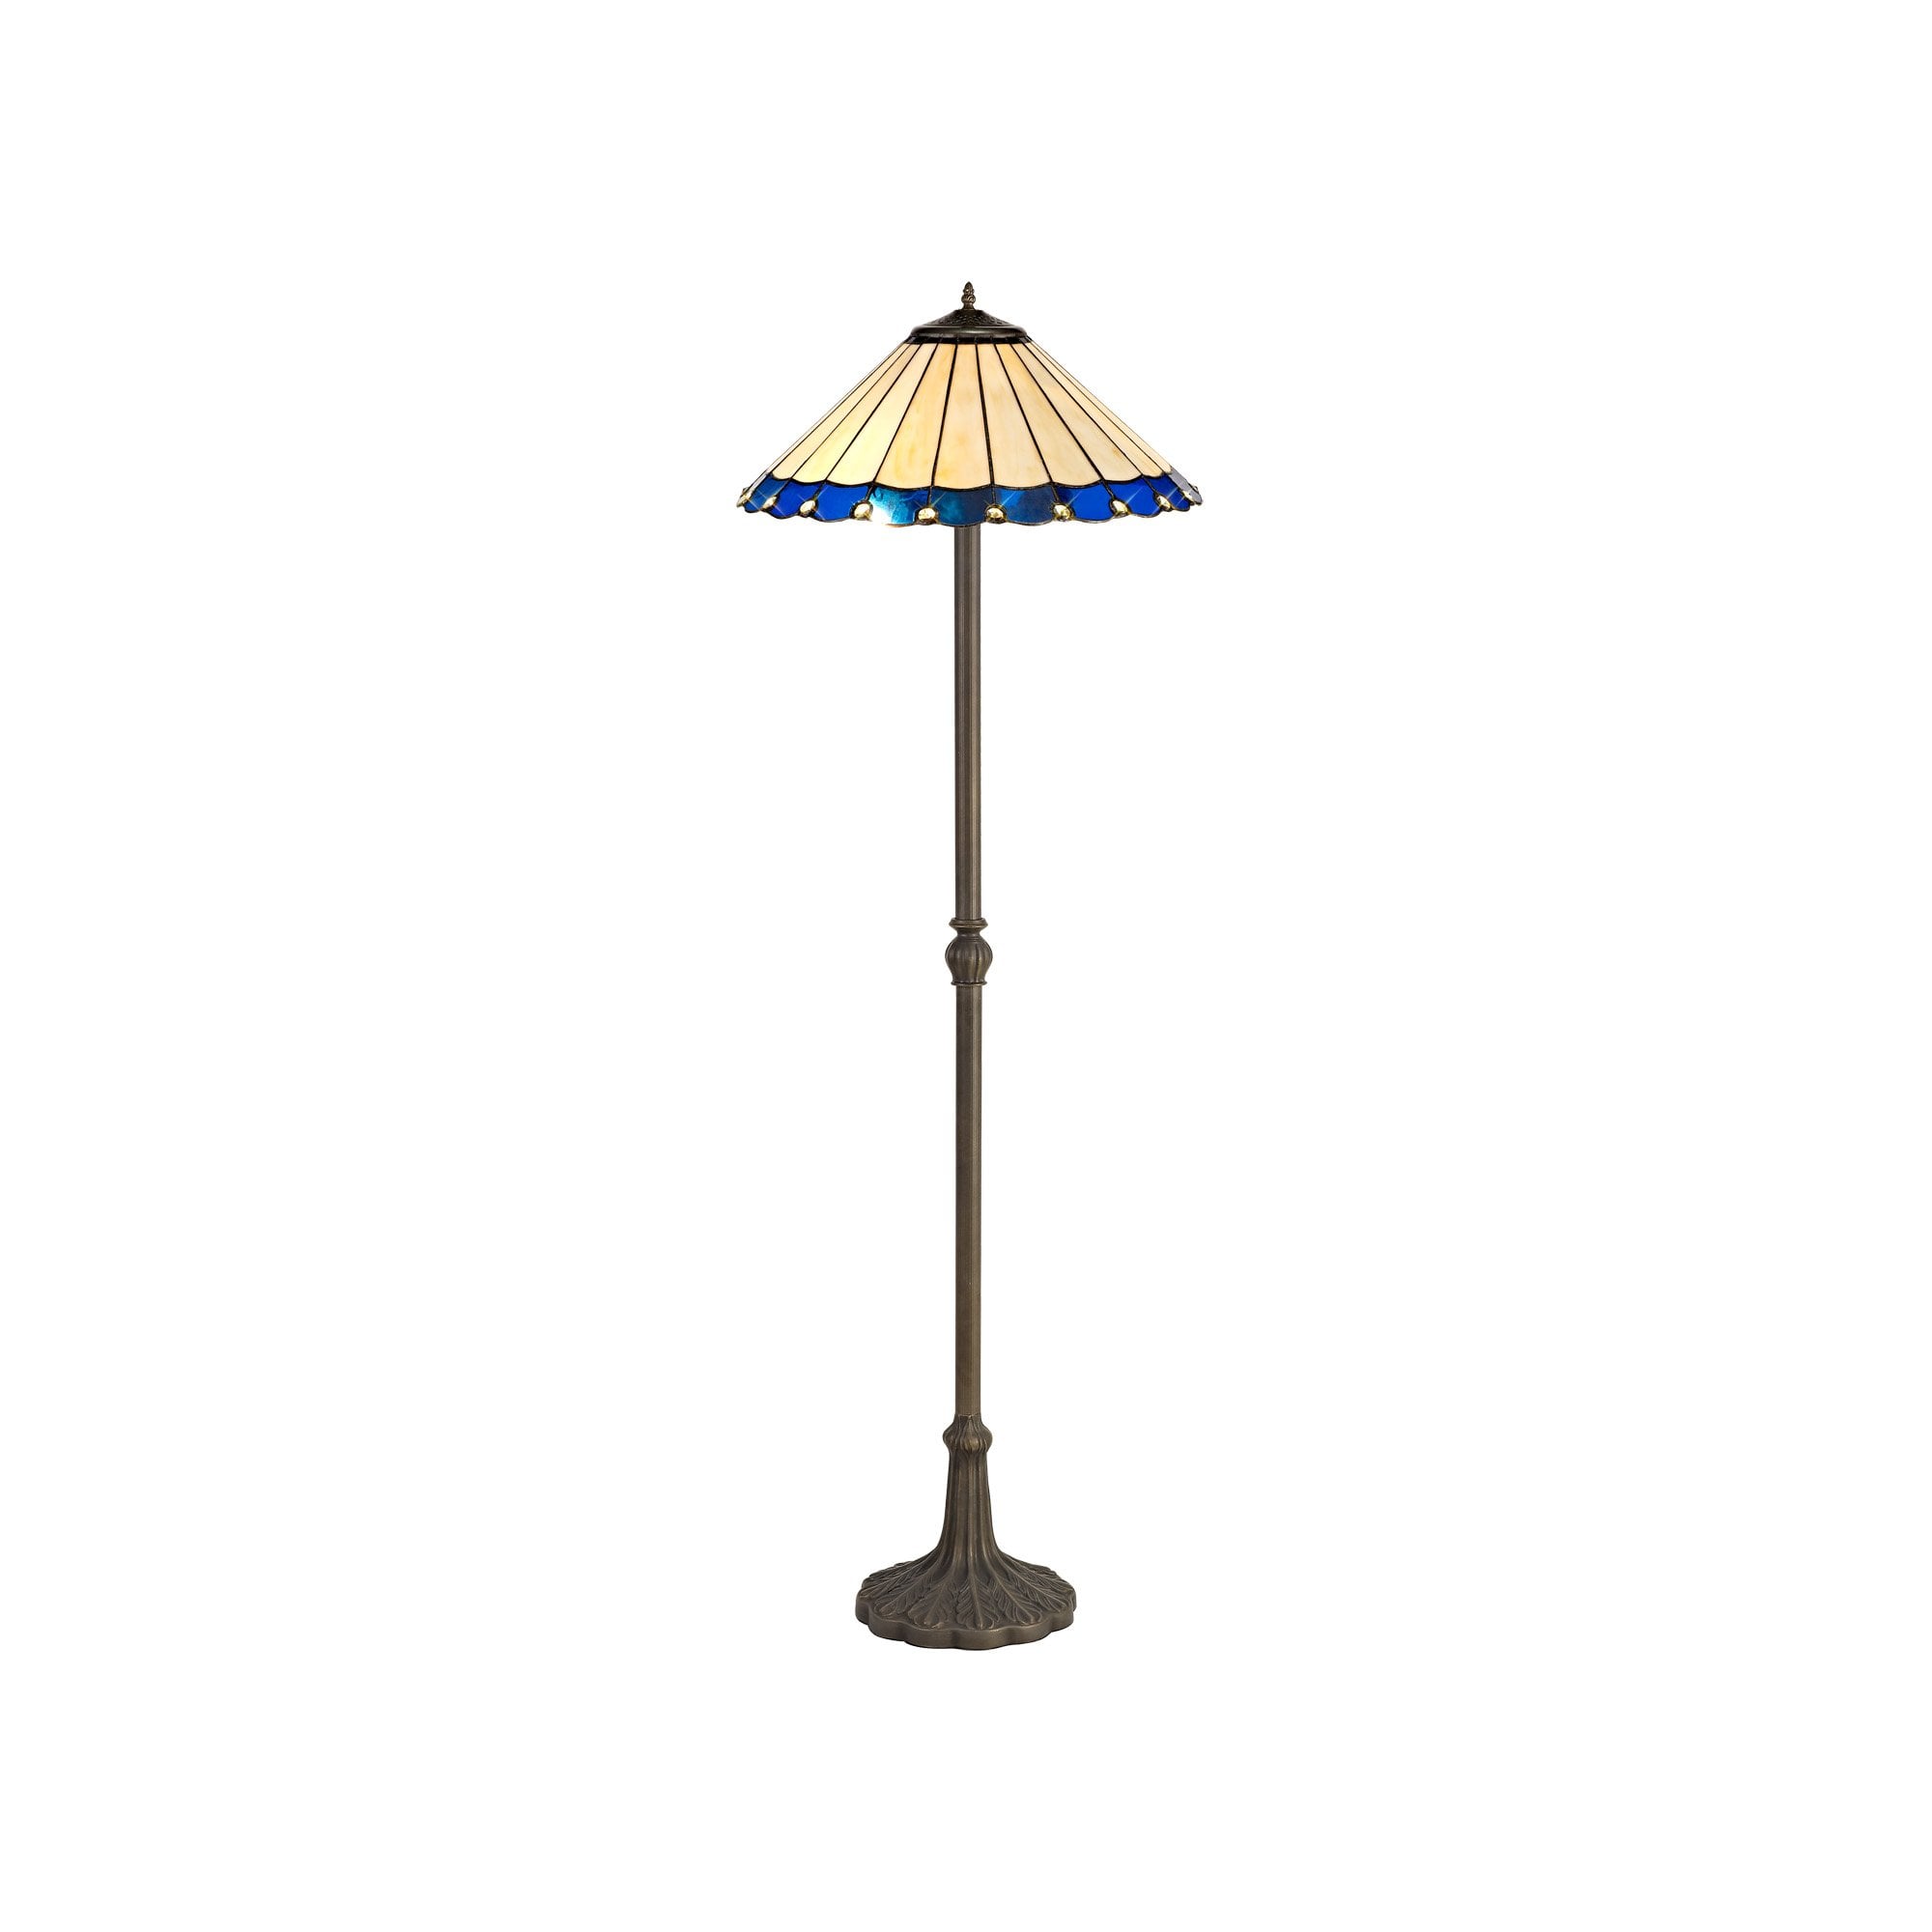 2 Light Leaf Design Floor Lamp E27 With 40cm Tiffany Shade, Blue/Cream/Crystal/Aged Antique Brass